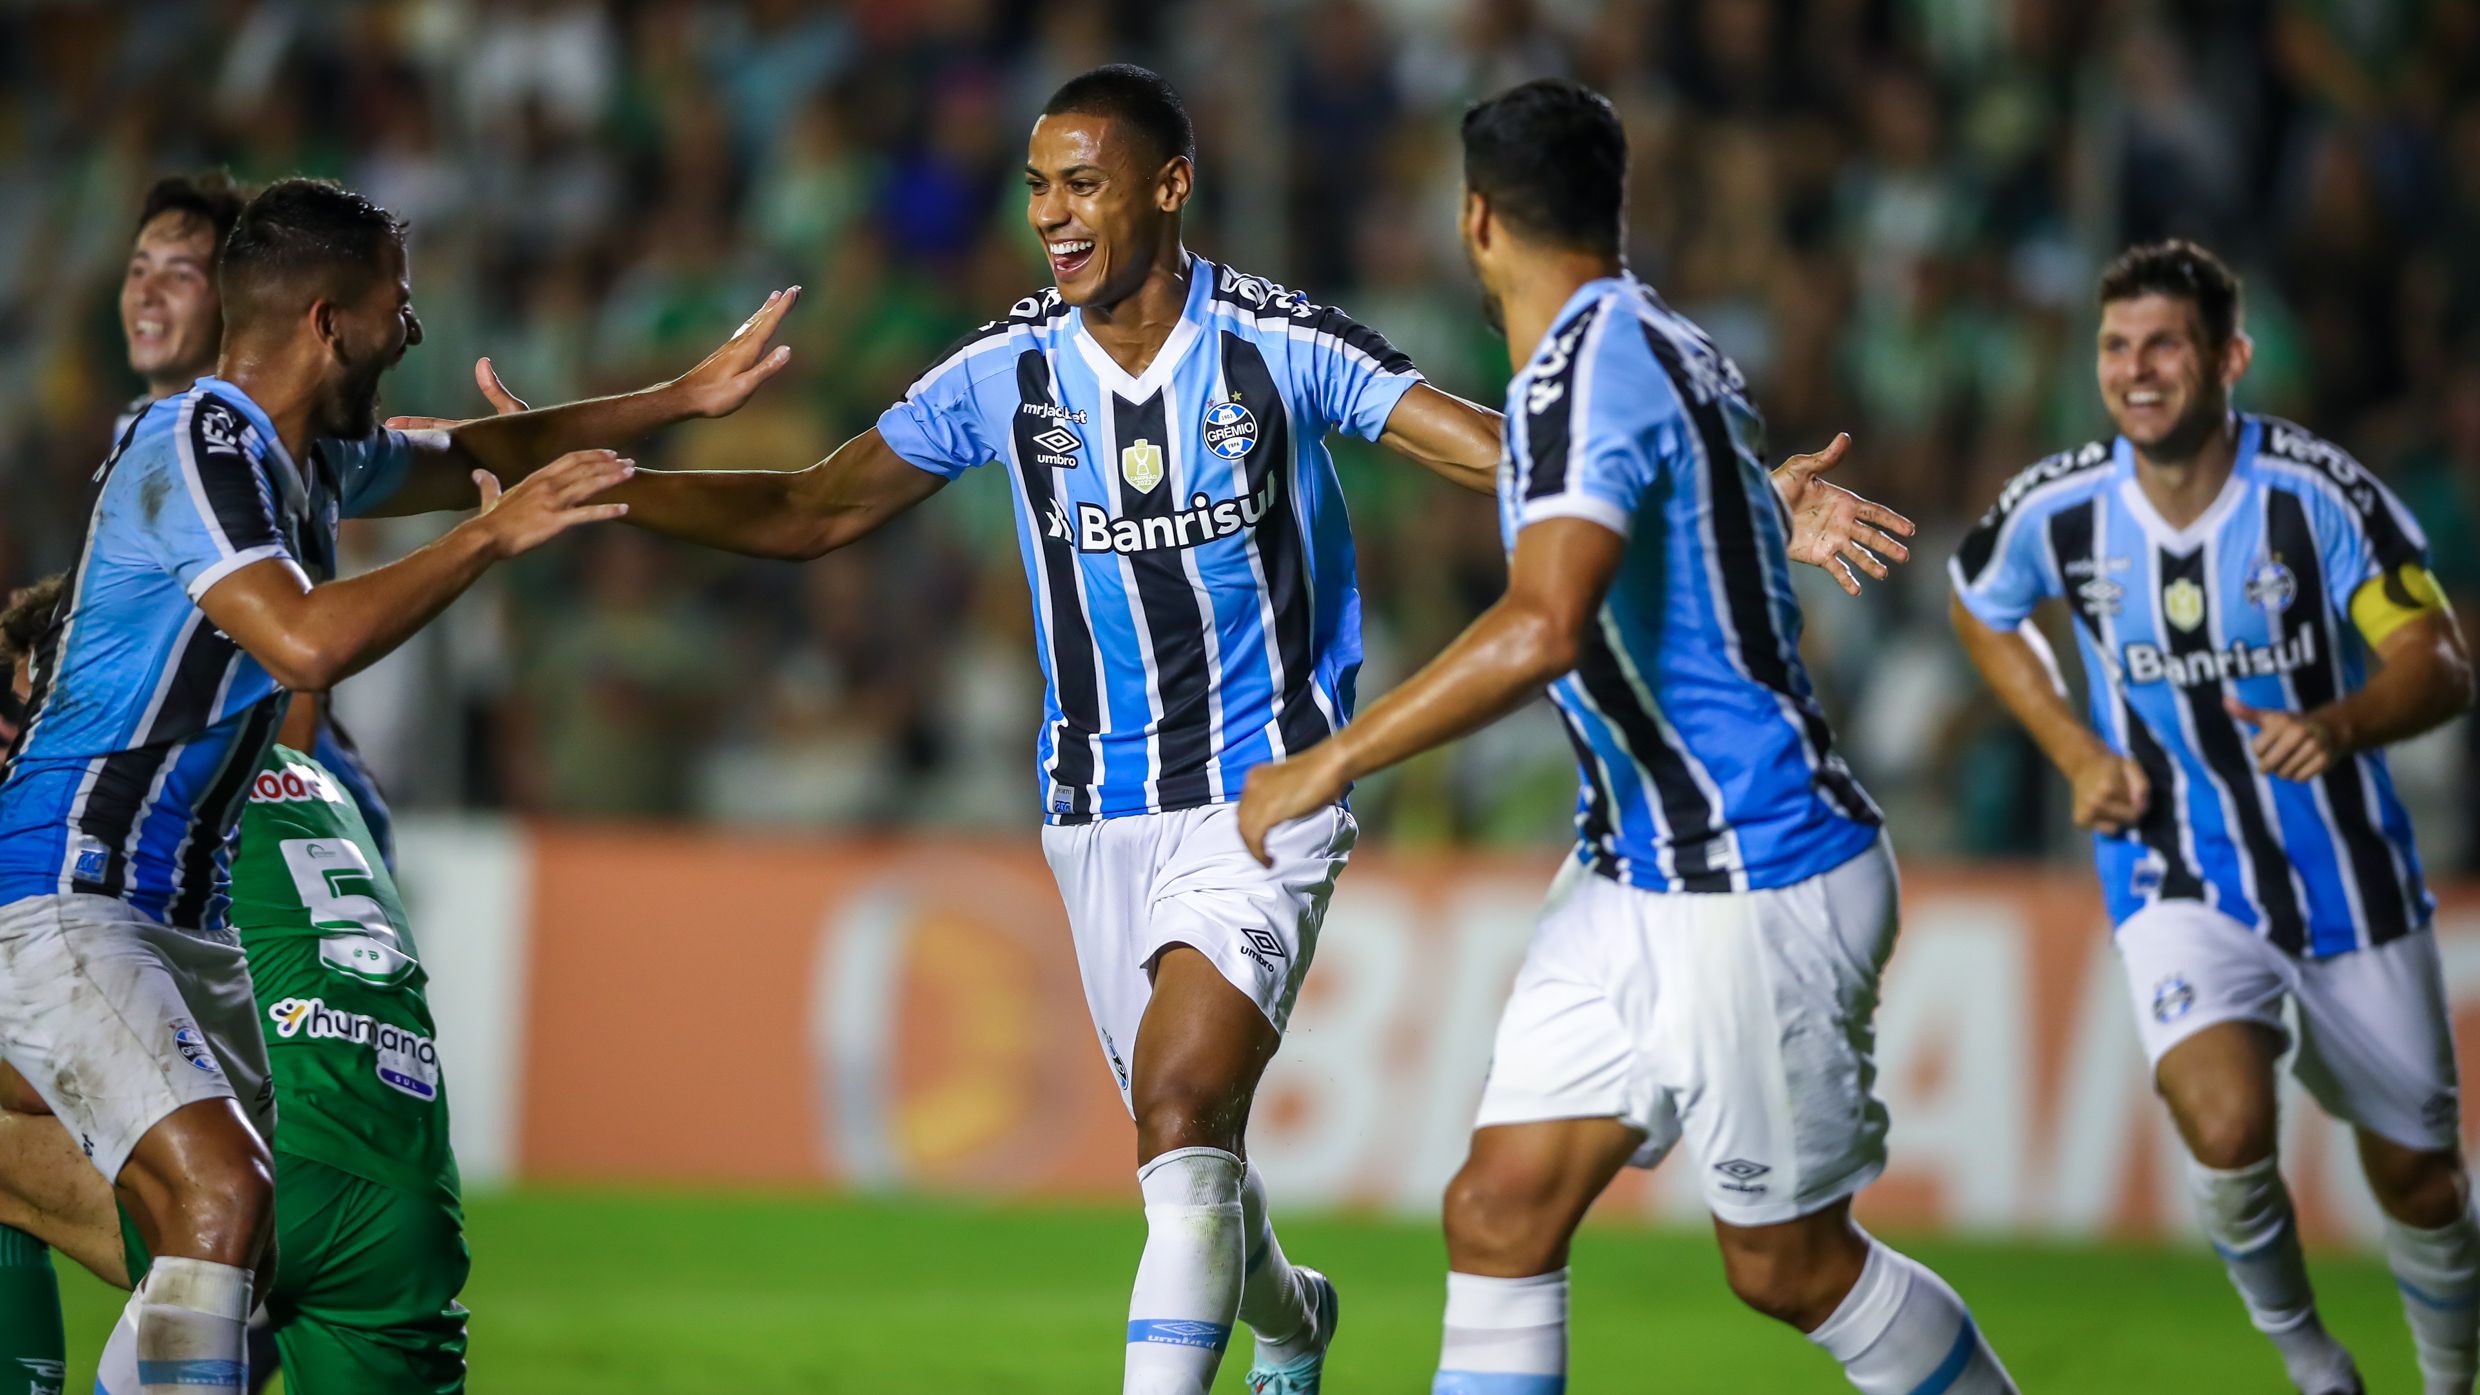 Grêmio vs Ituano: A Clash of Styles and Histories